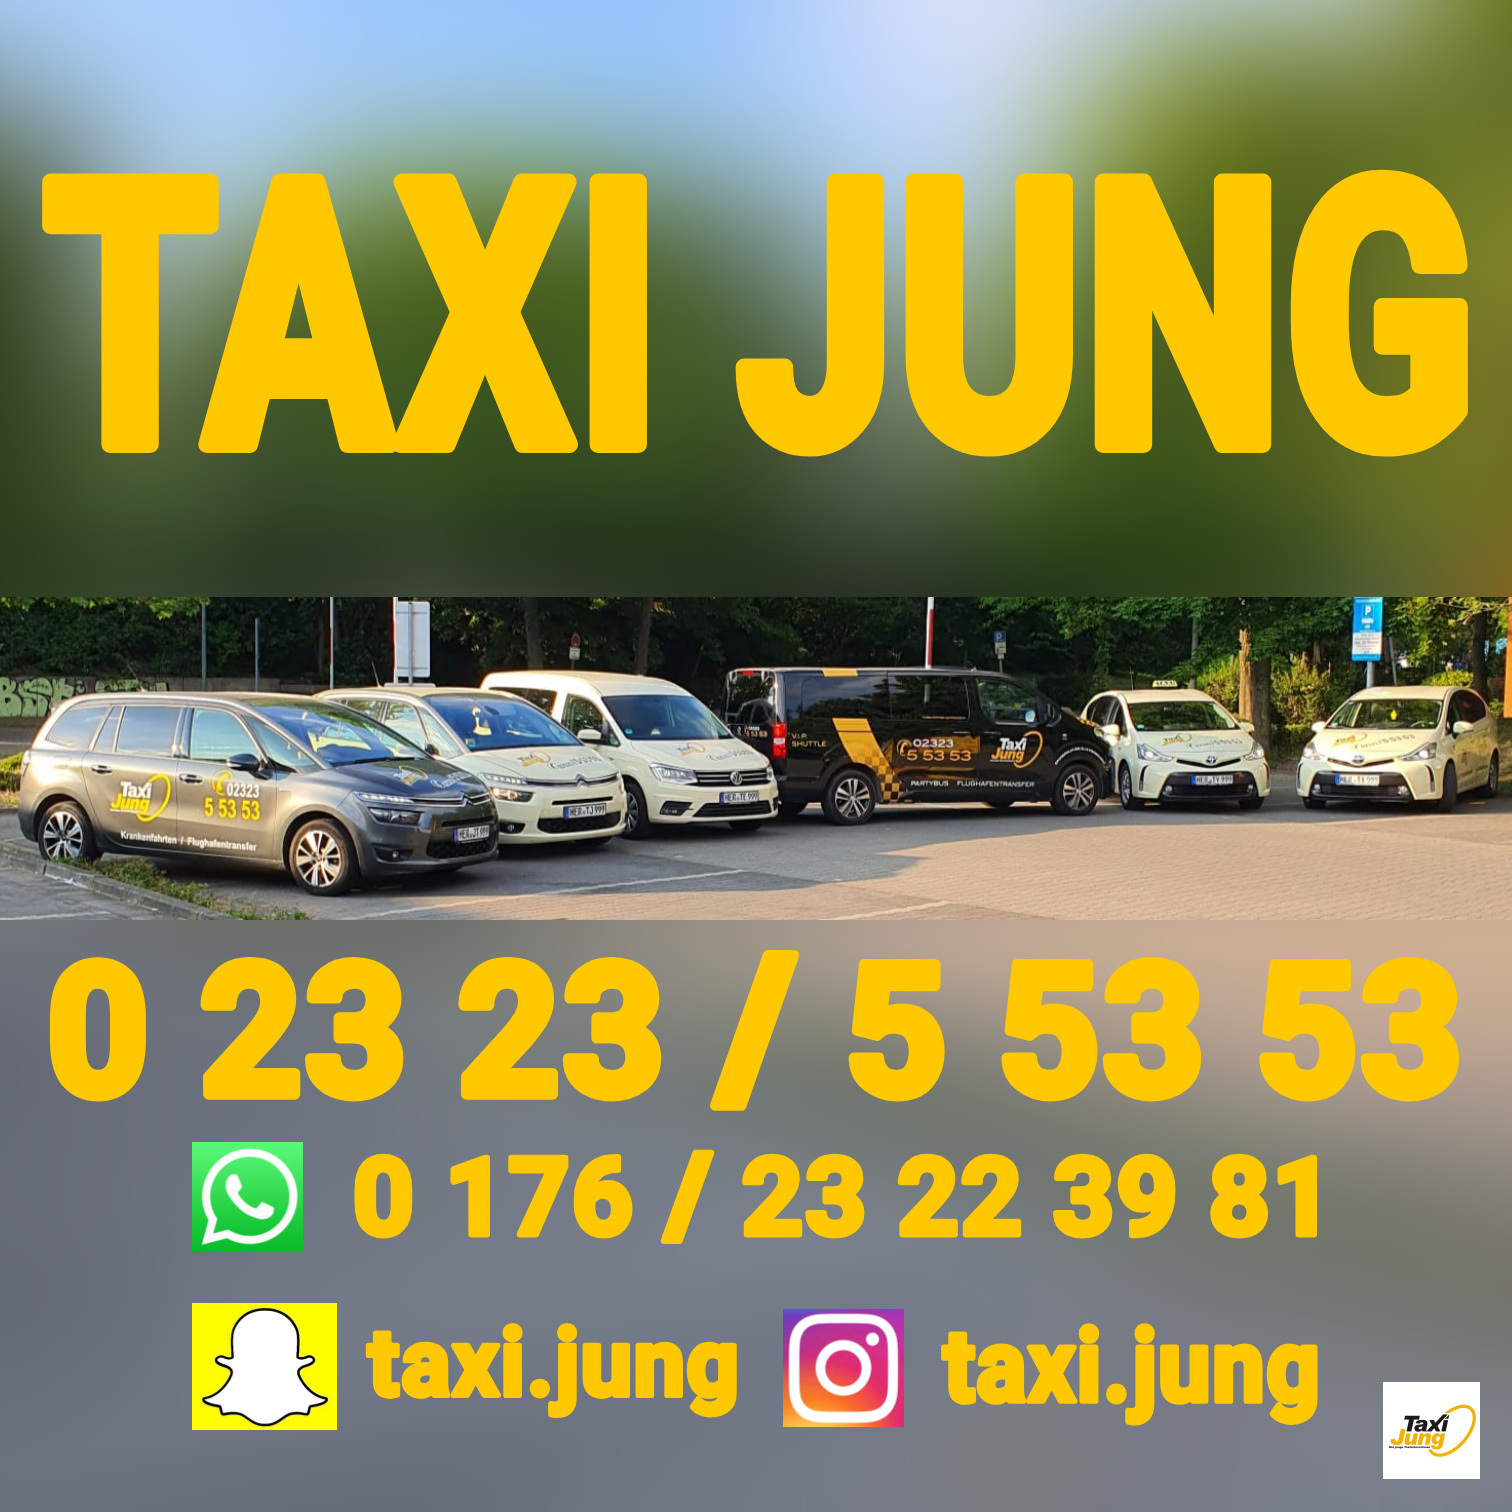 Bild 37 Emre Üstünkul Taxibetrieb Taxi Jung in Herne